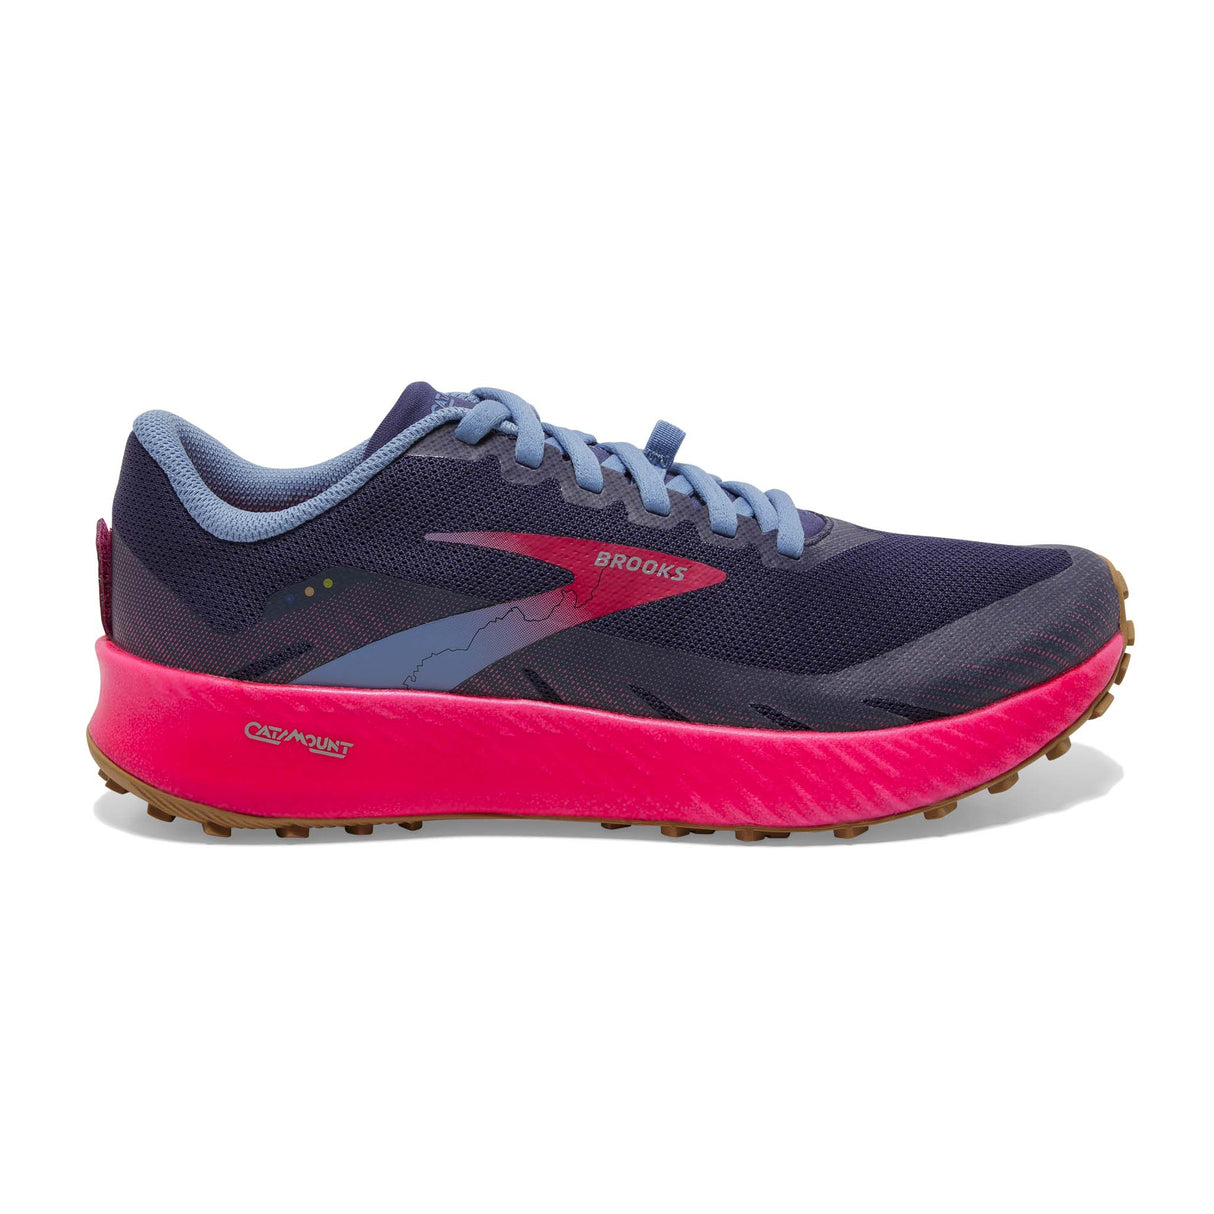 Brooks Catamount chaussures de course à pied trail femme deep cobalt diva pink oyster mushroom